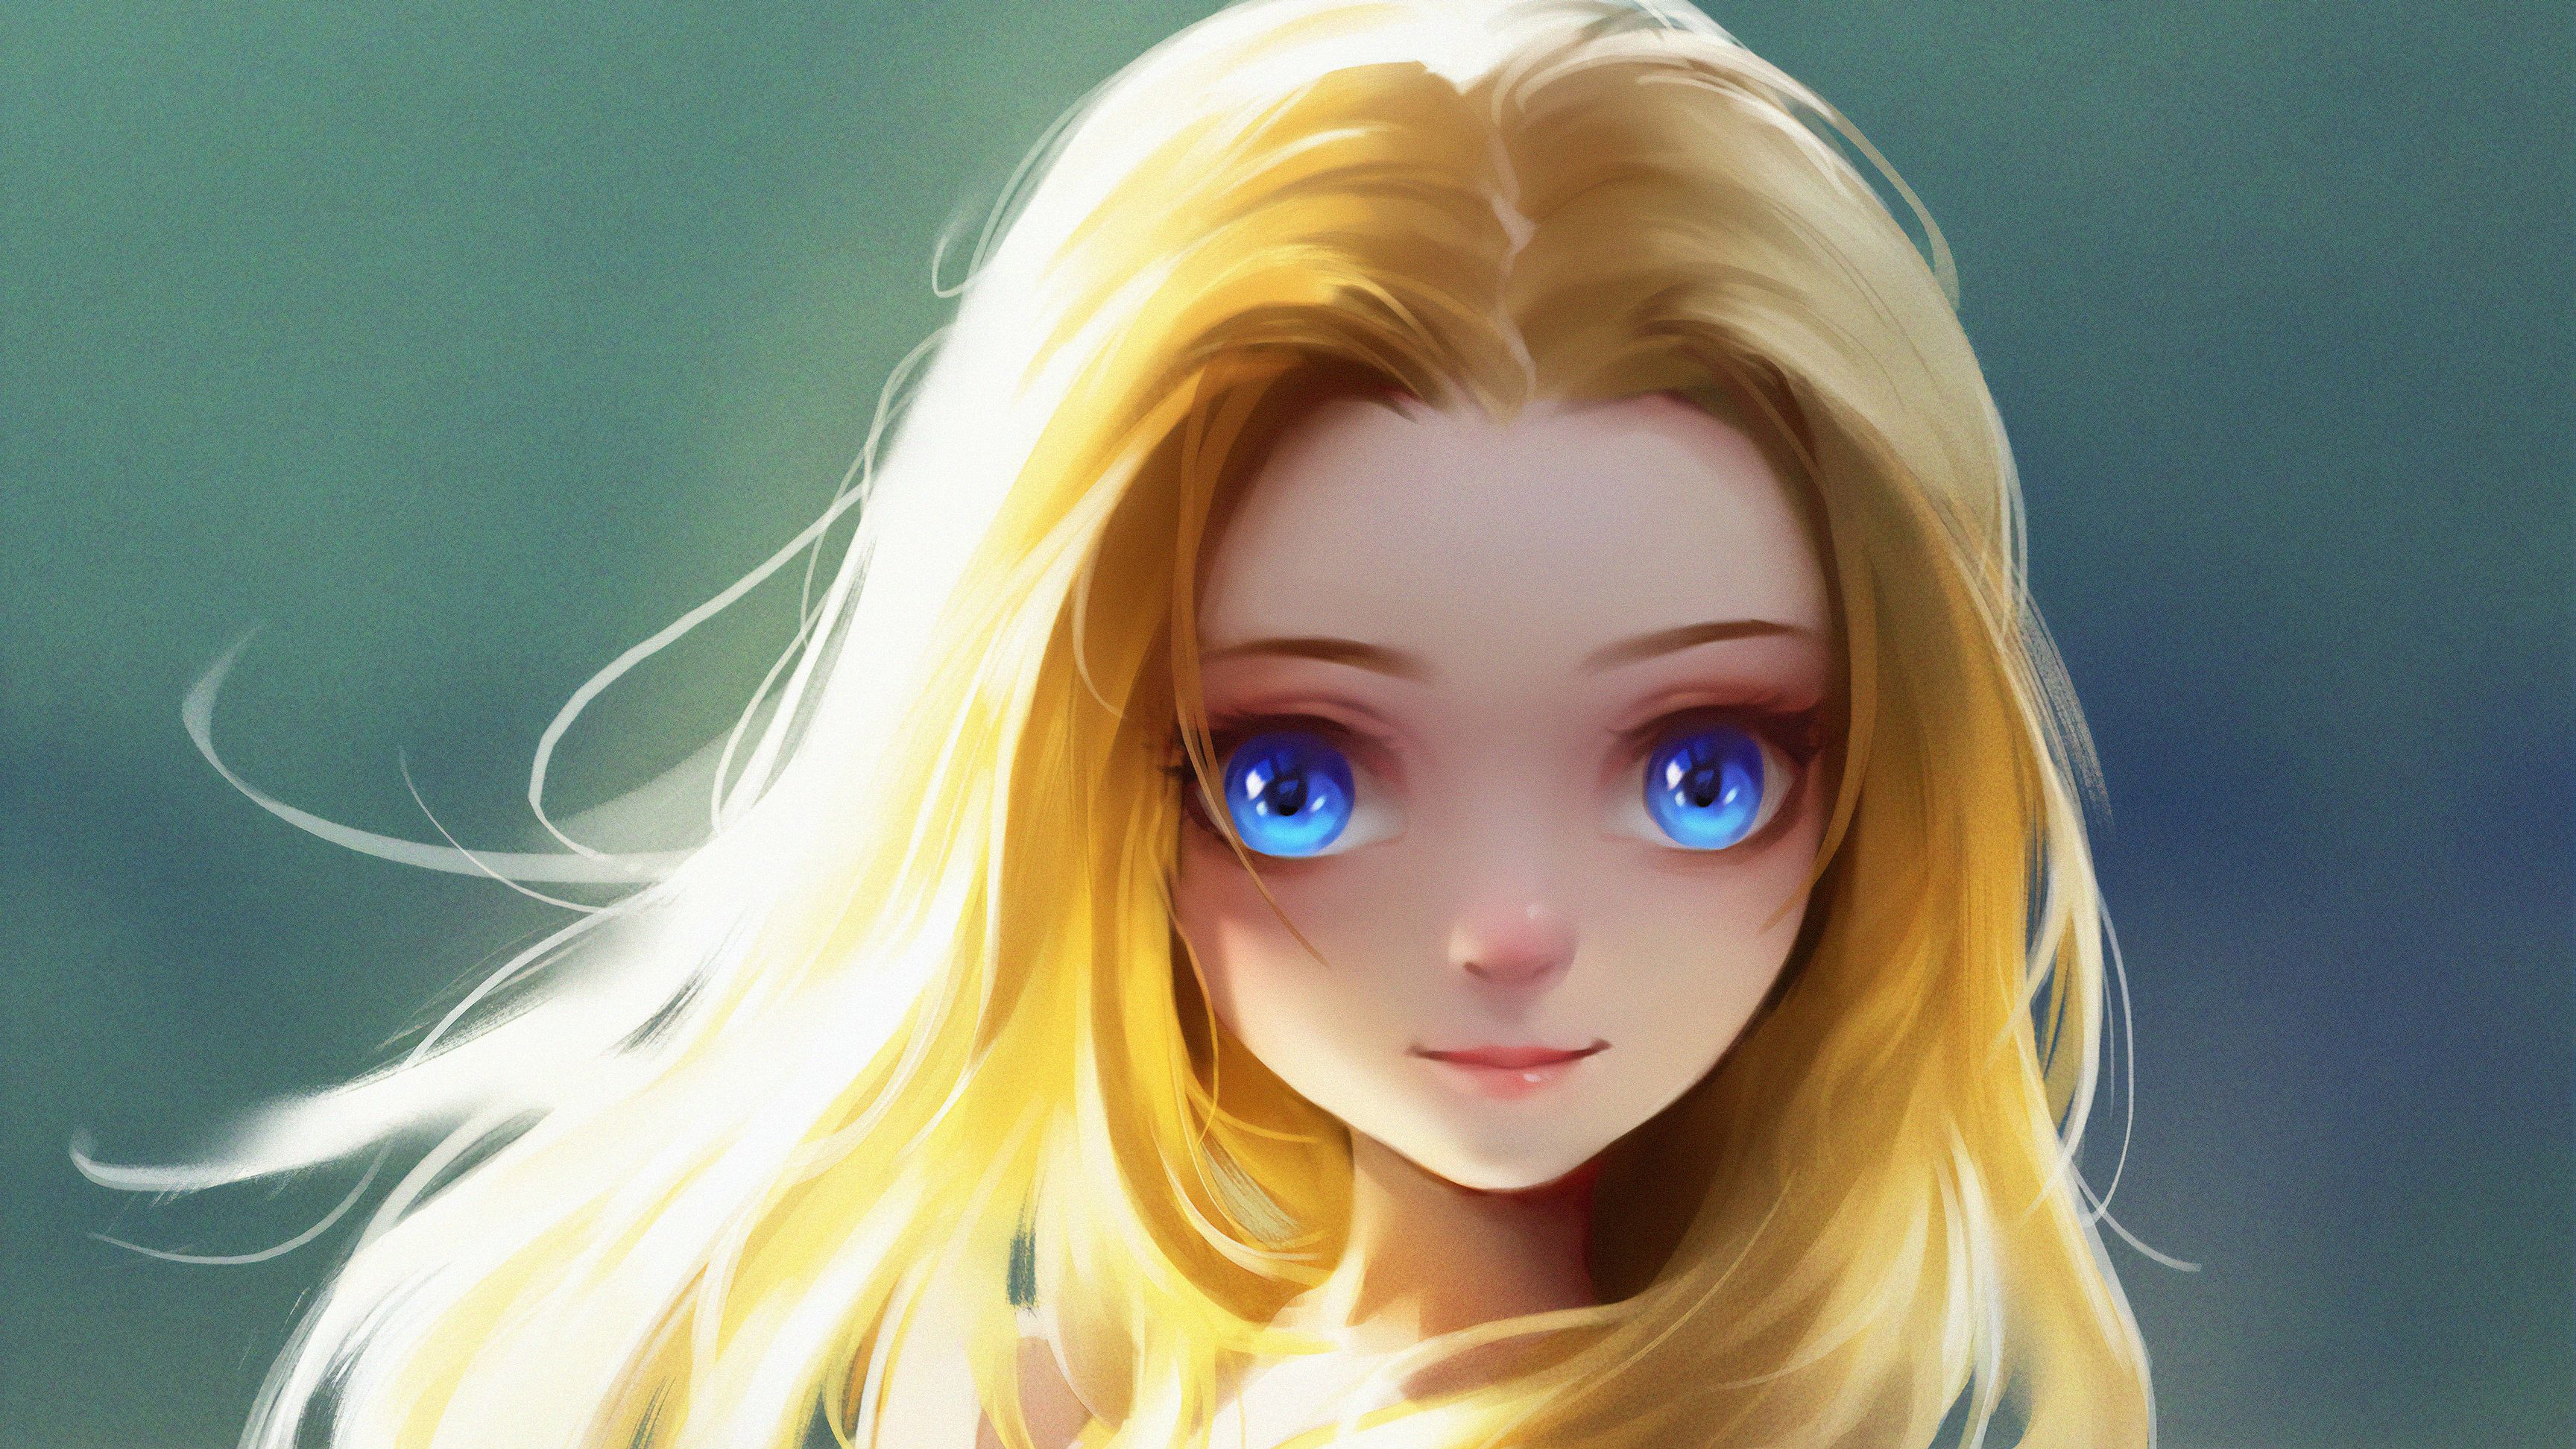 Cute Little Blonde Girl Blue Eyes Digital Art, HD Artist, 4k Wallpaper, Image, Background, Photo and Picture